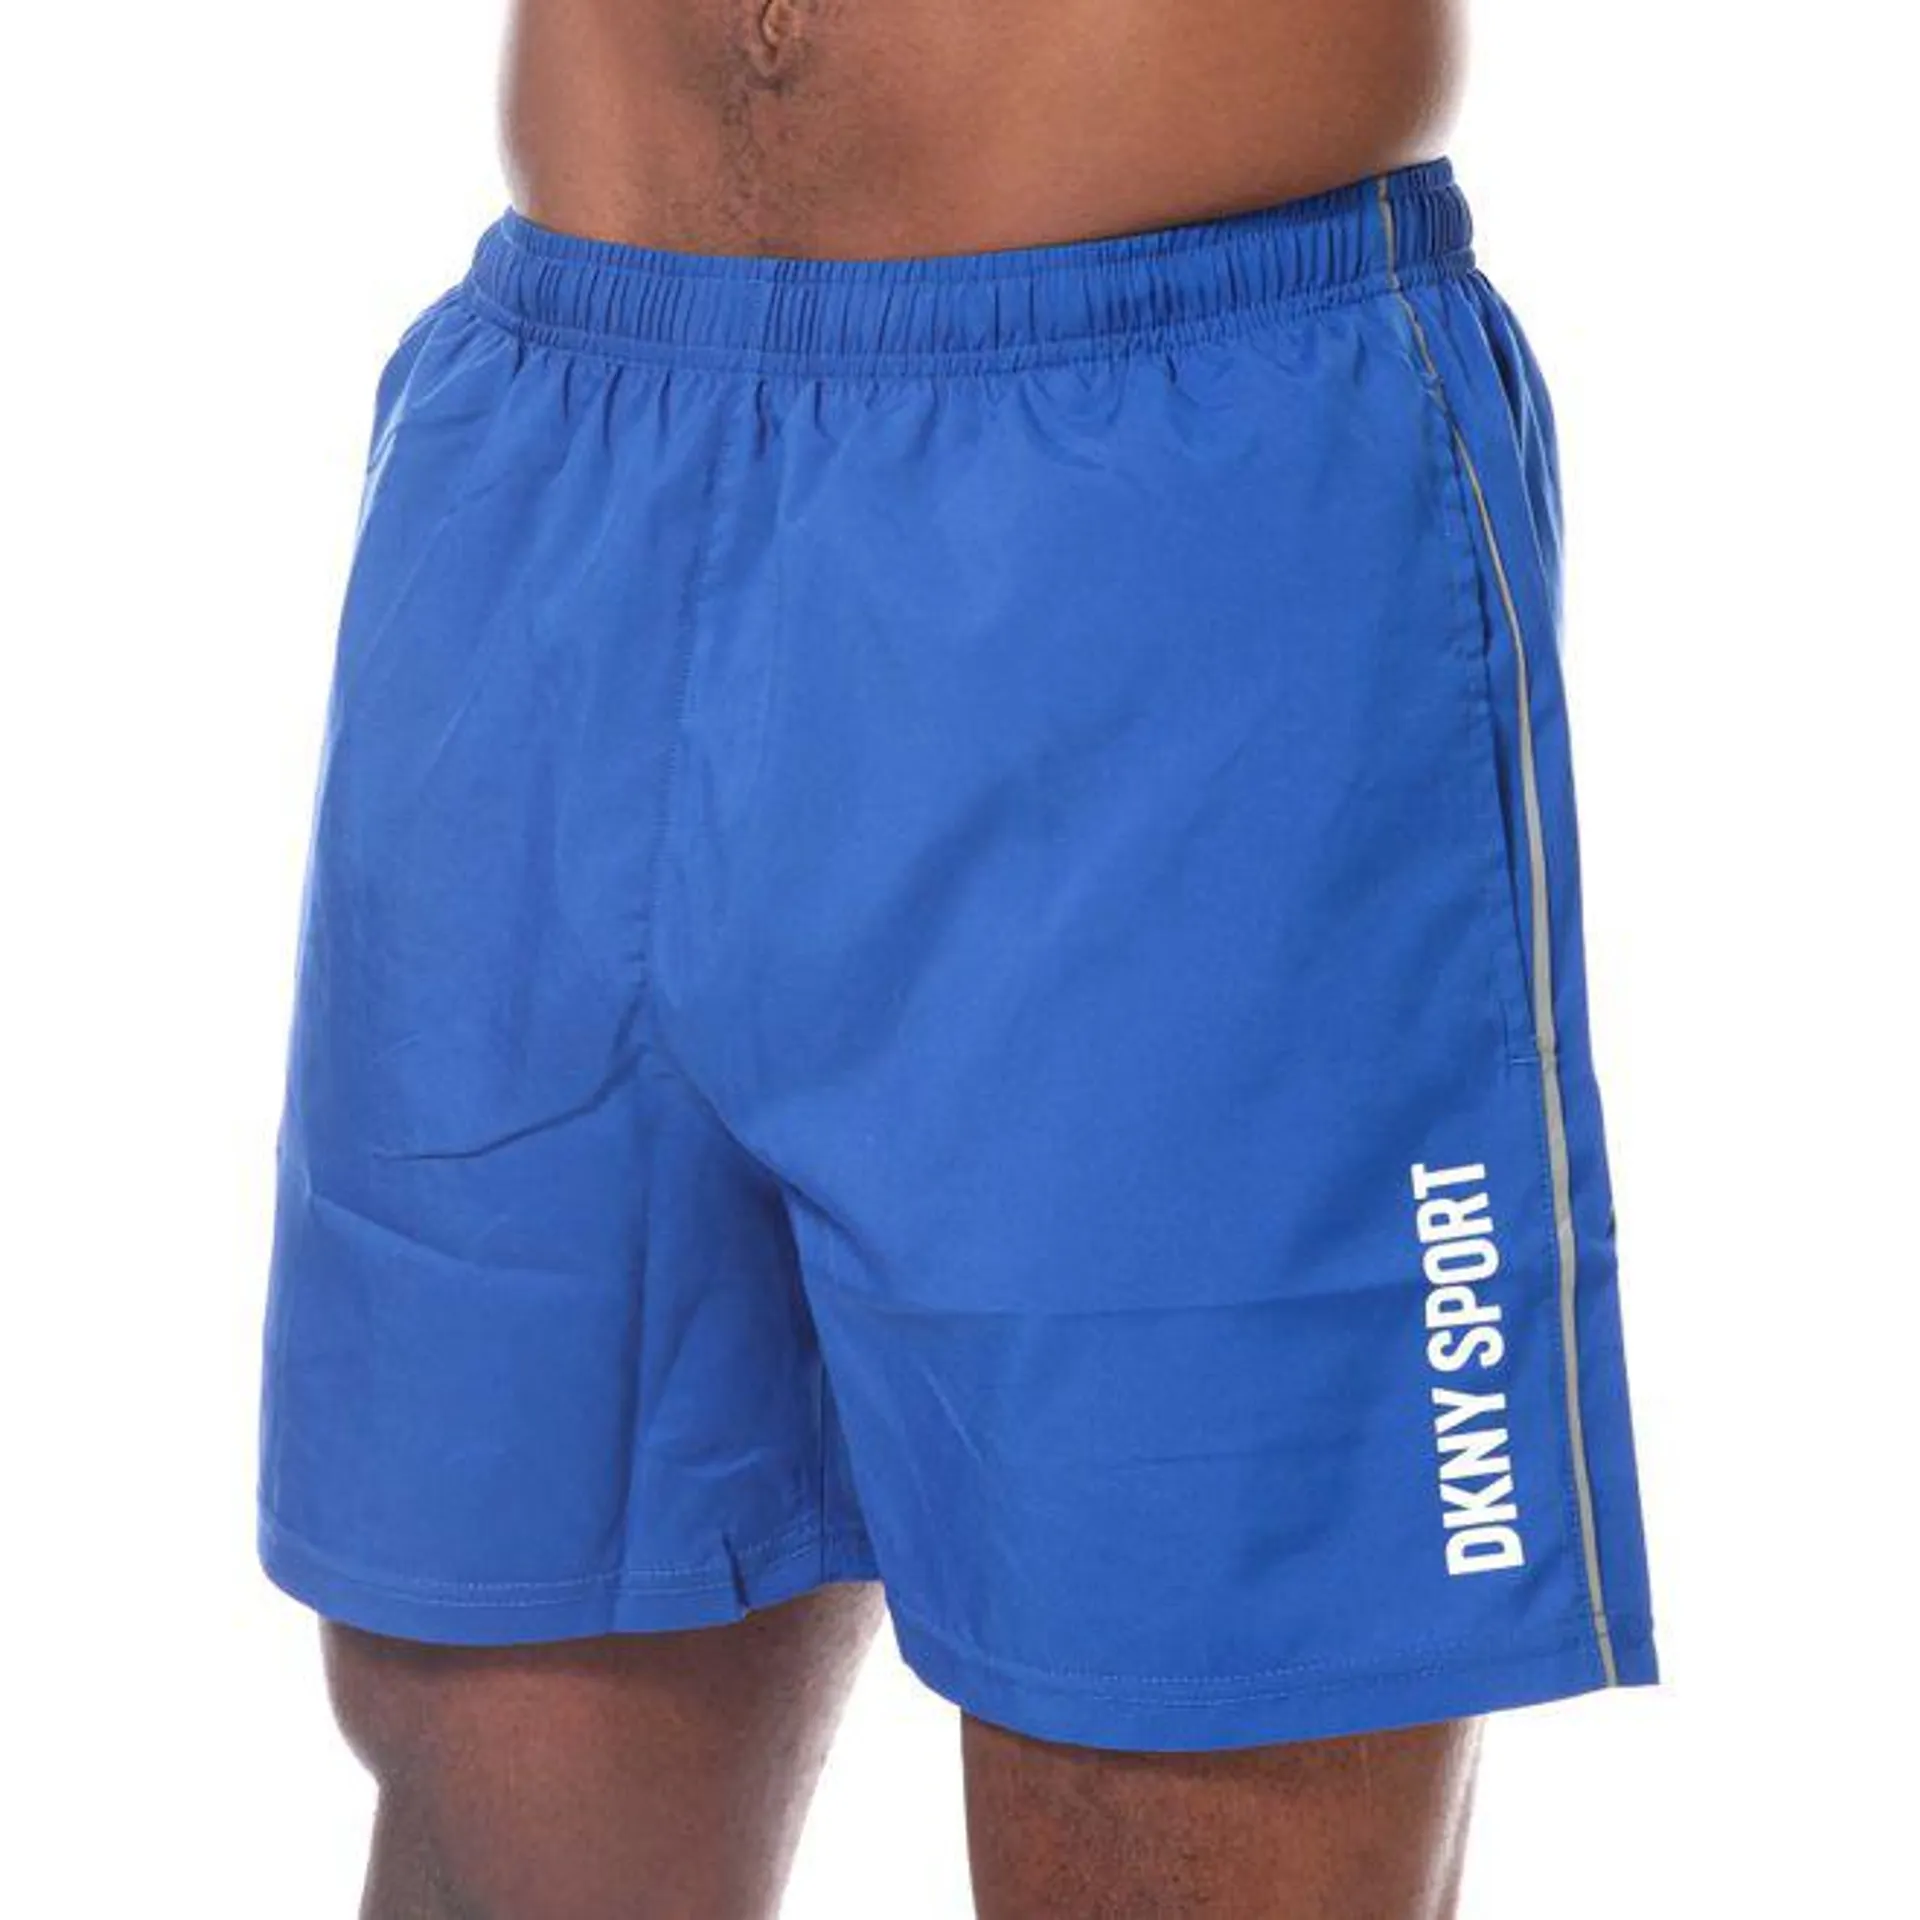 DKNY Mens Nemesis Running Shorts in Blue